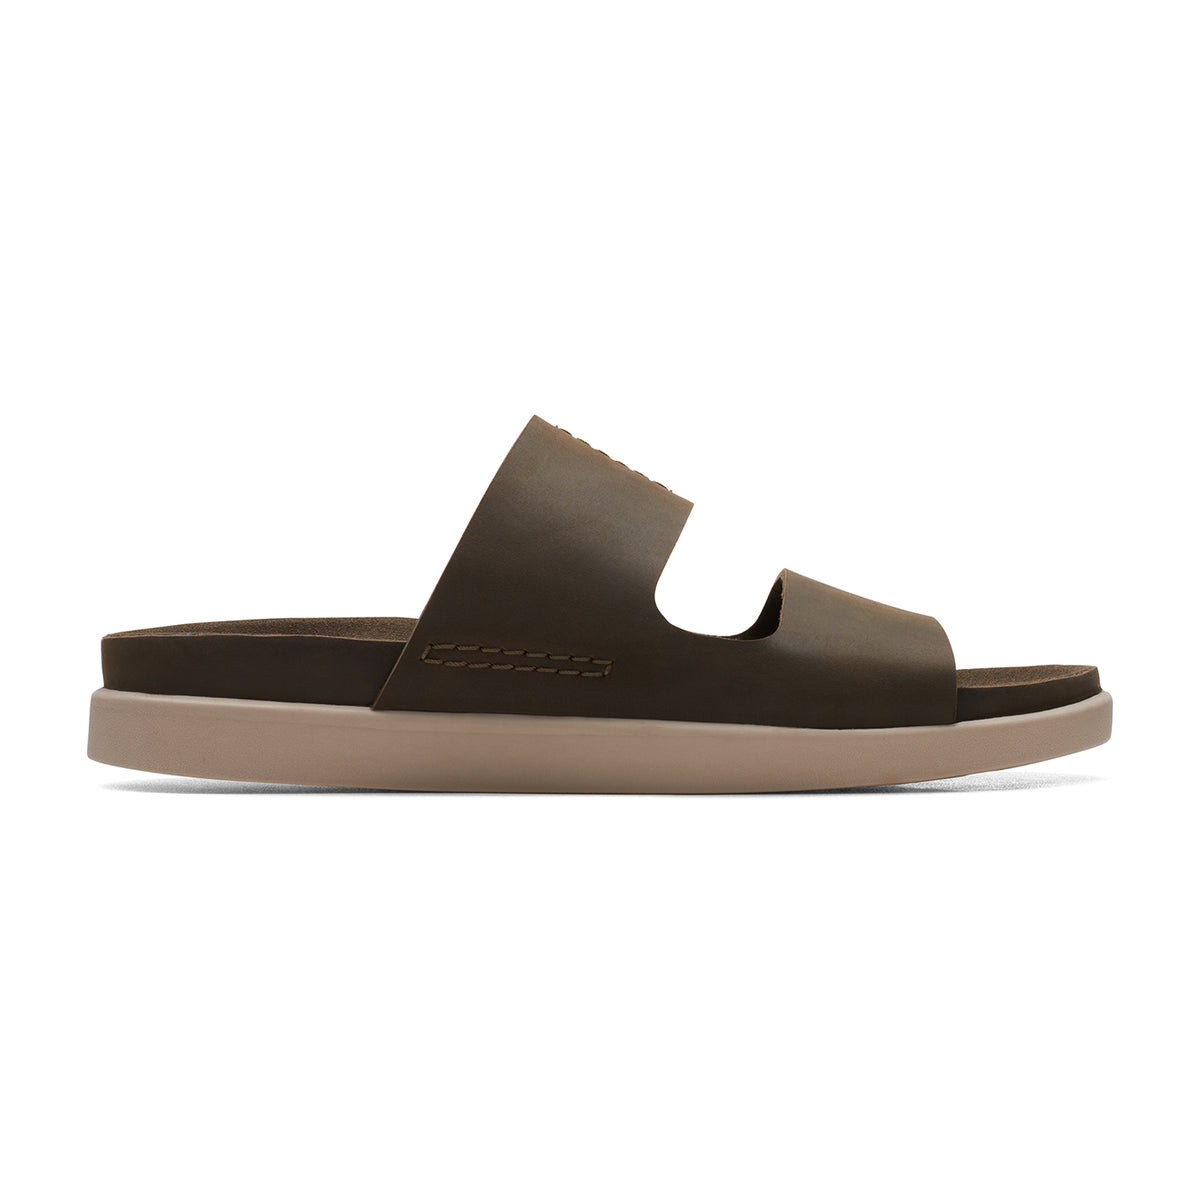 Shop Sunder Coast - Men's Sandals | Clarks